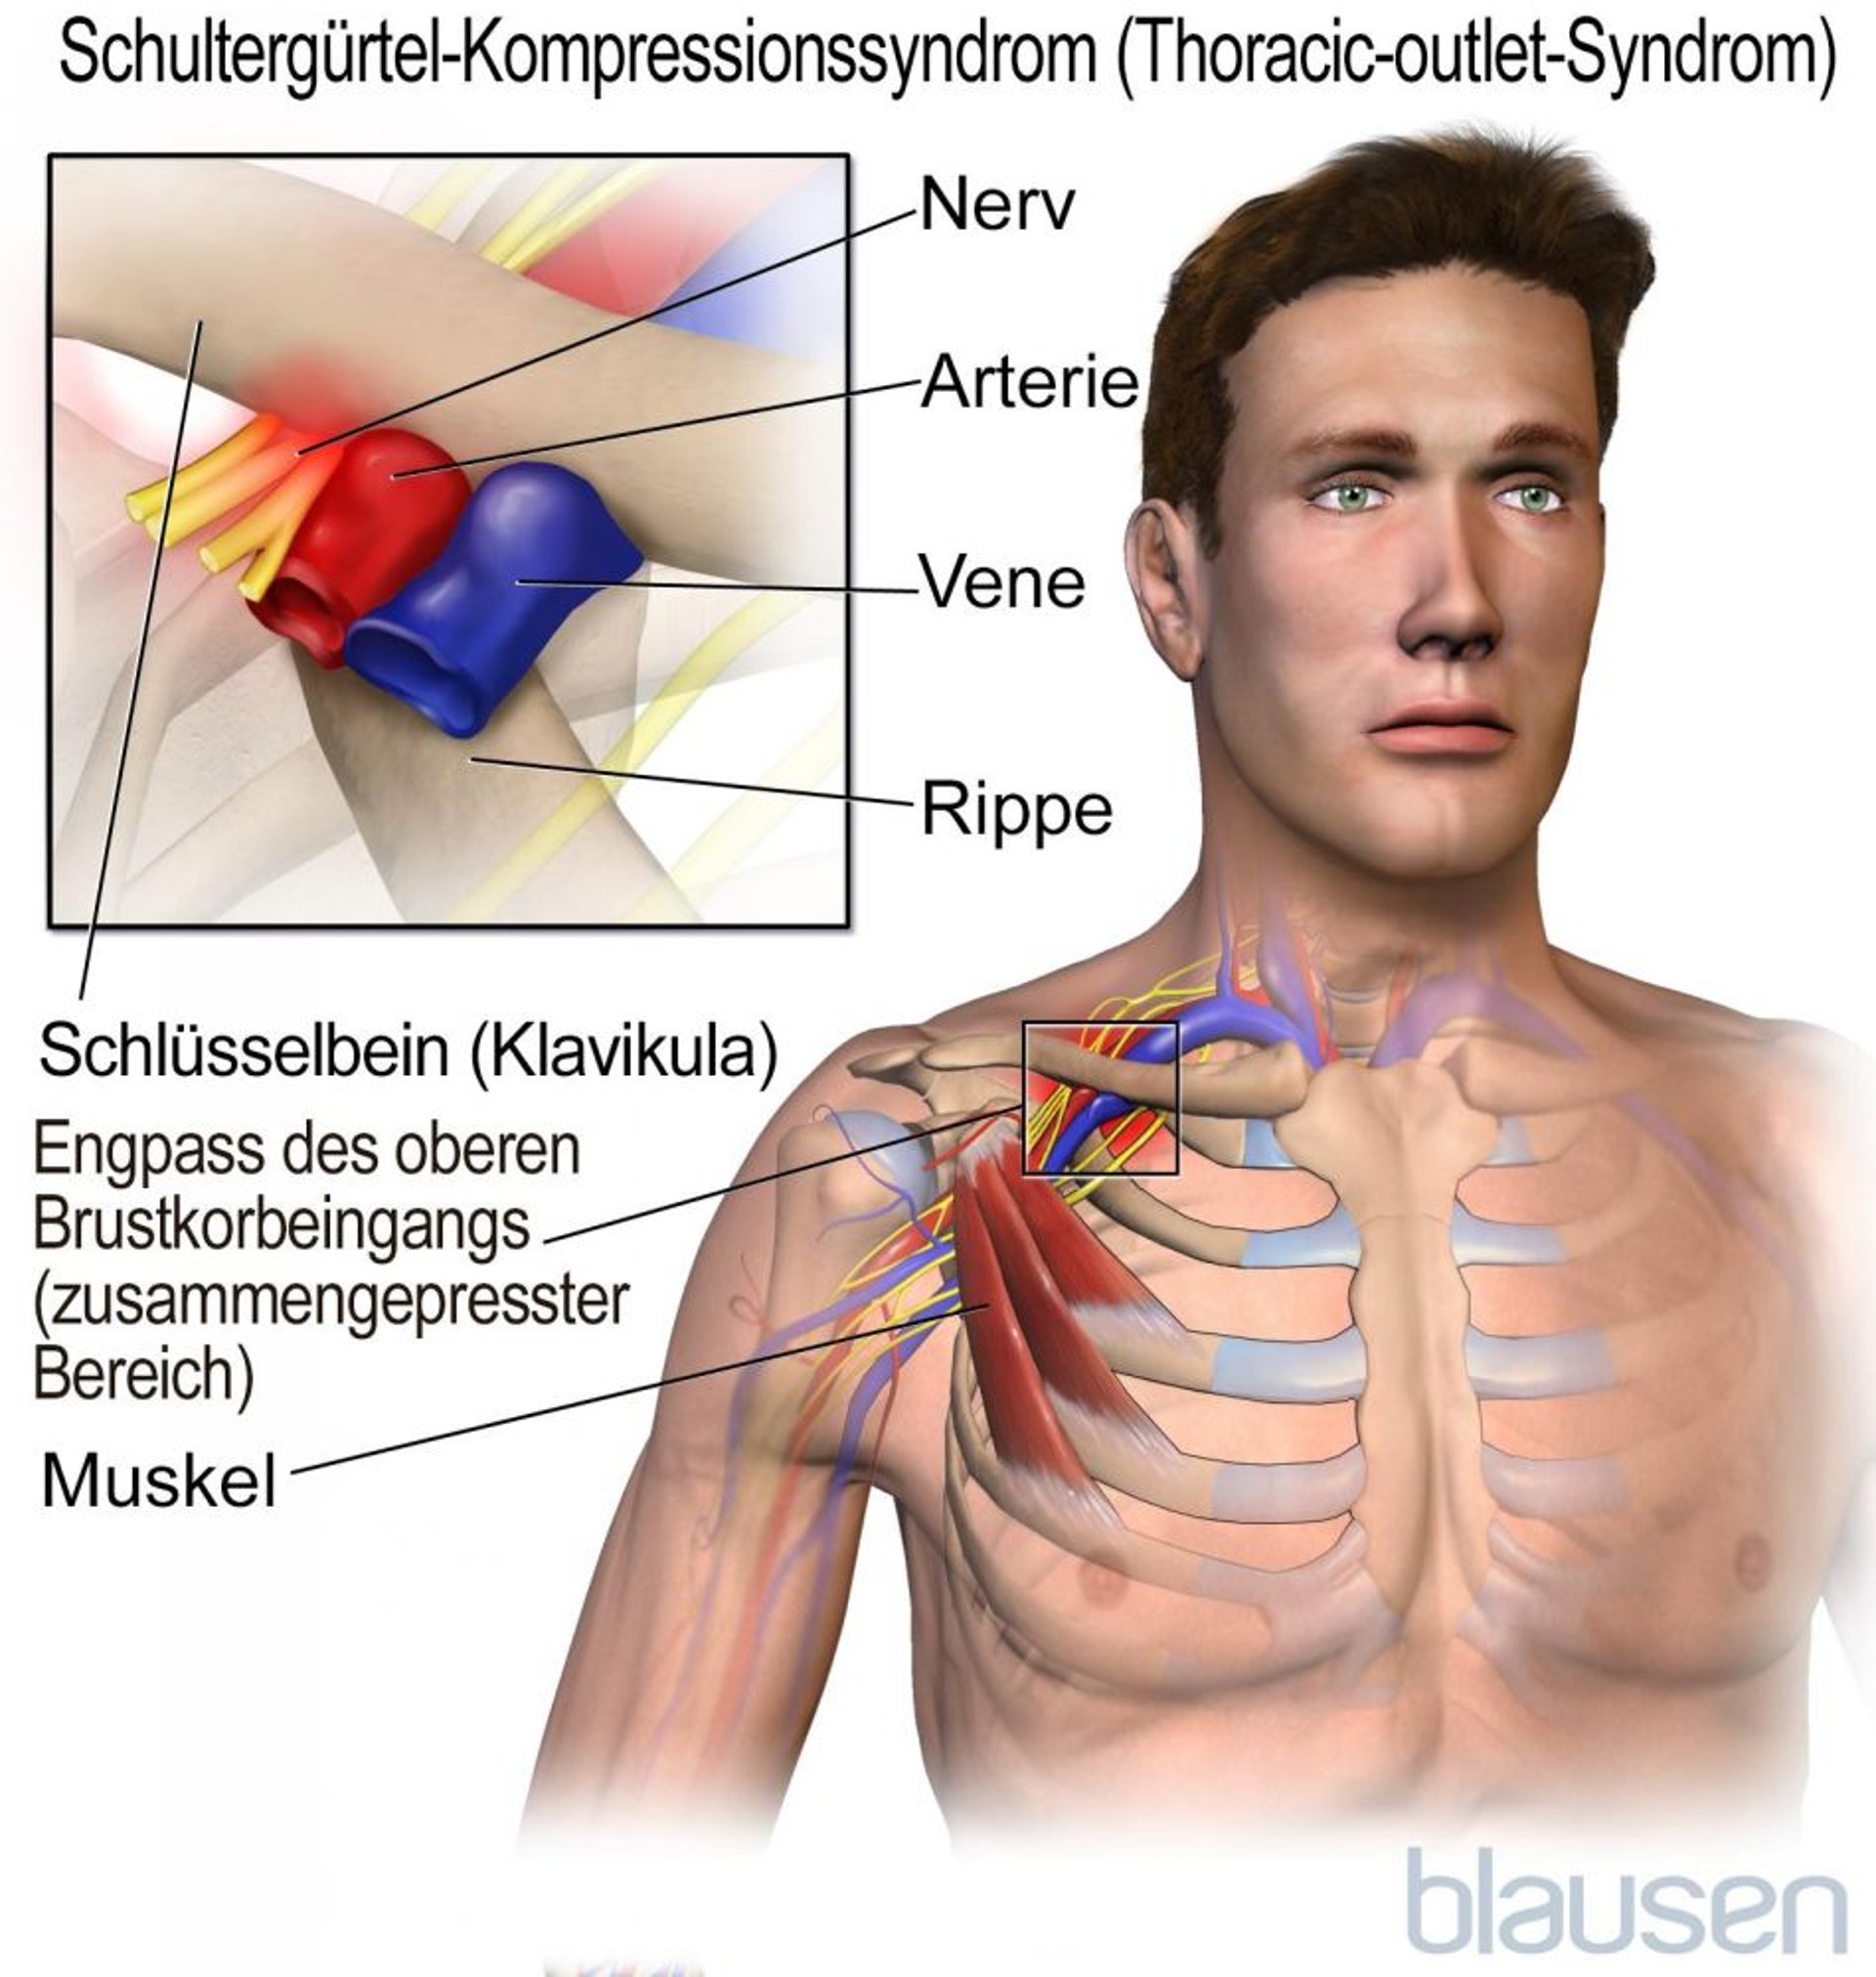 Schultergürtel-Kompressionssyndrom (Thoracic-outlet-Syndrom)